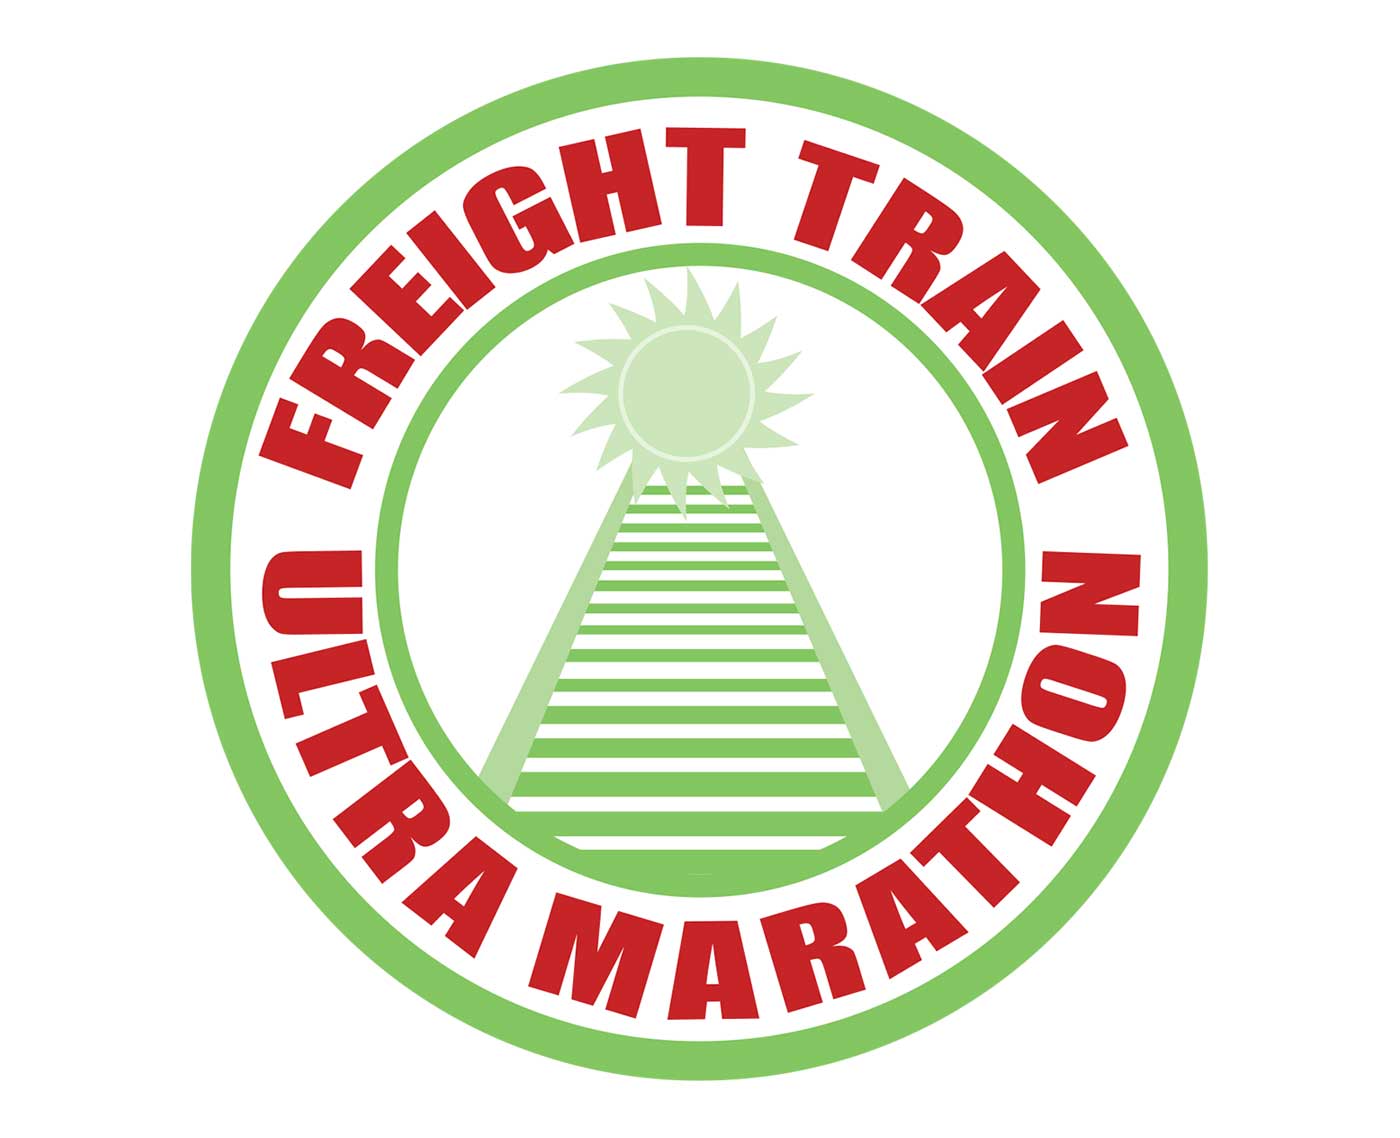 Freight Train Ultra Marathon Virginia Adventures